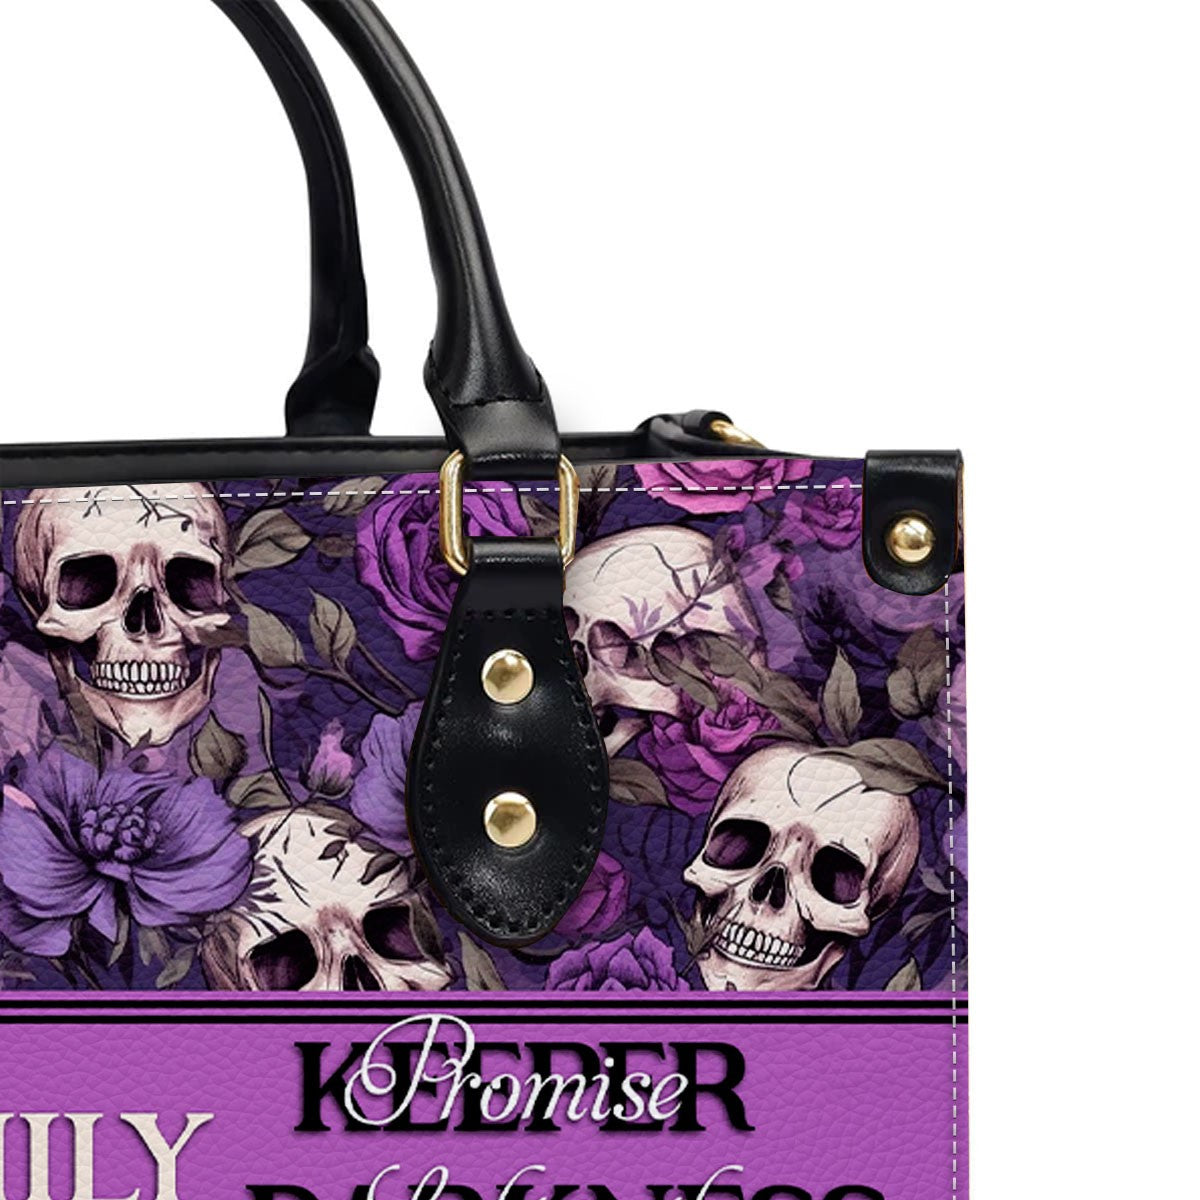 CHRISTIANARTBAG: Personalized Handbags for Women | Custom Leather Bags